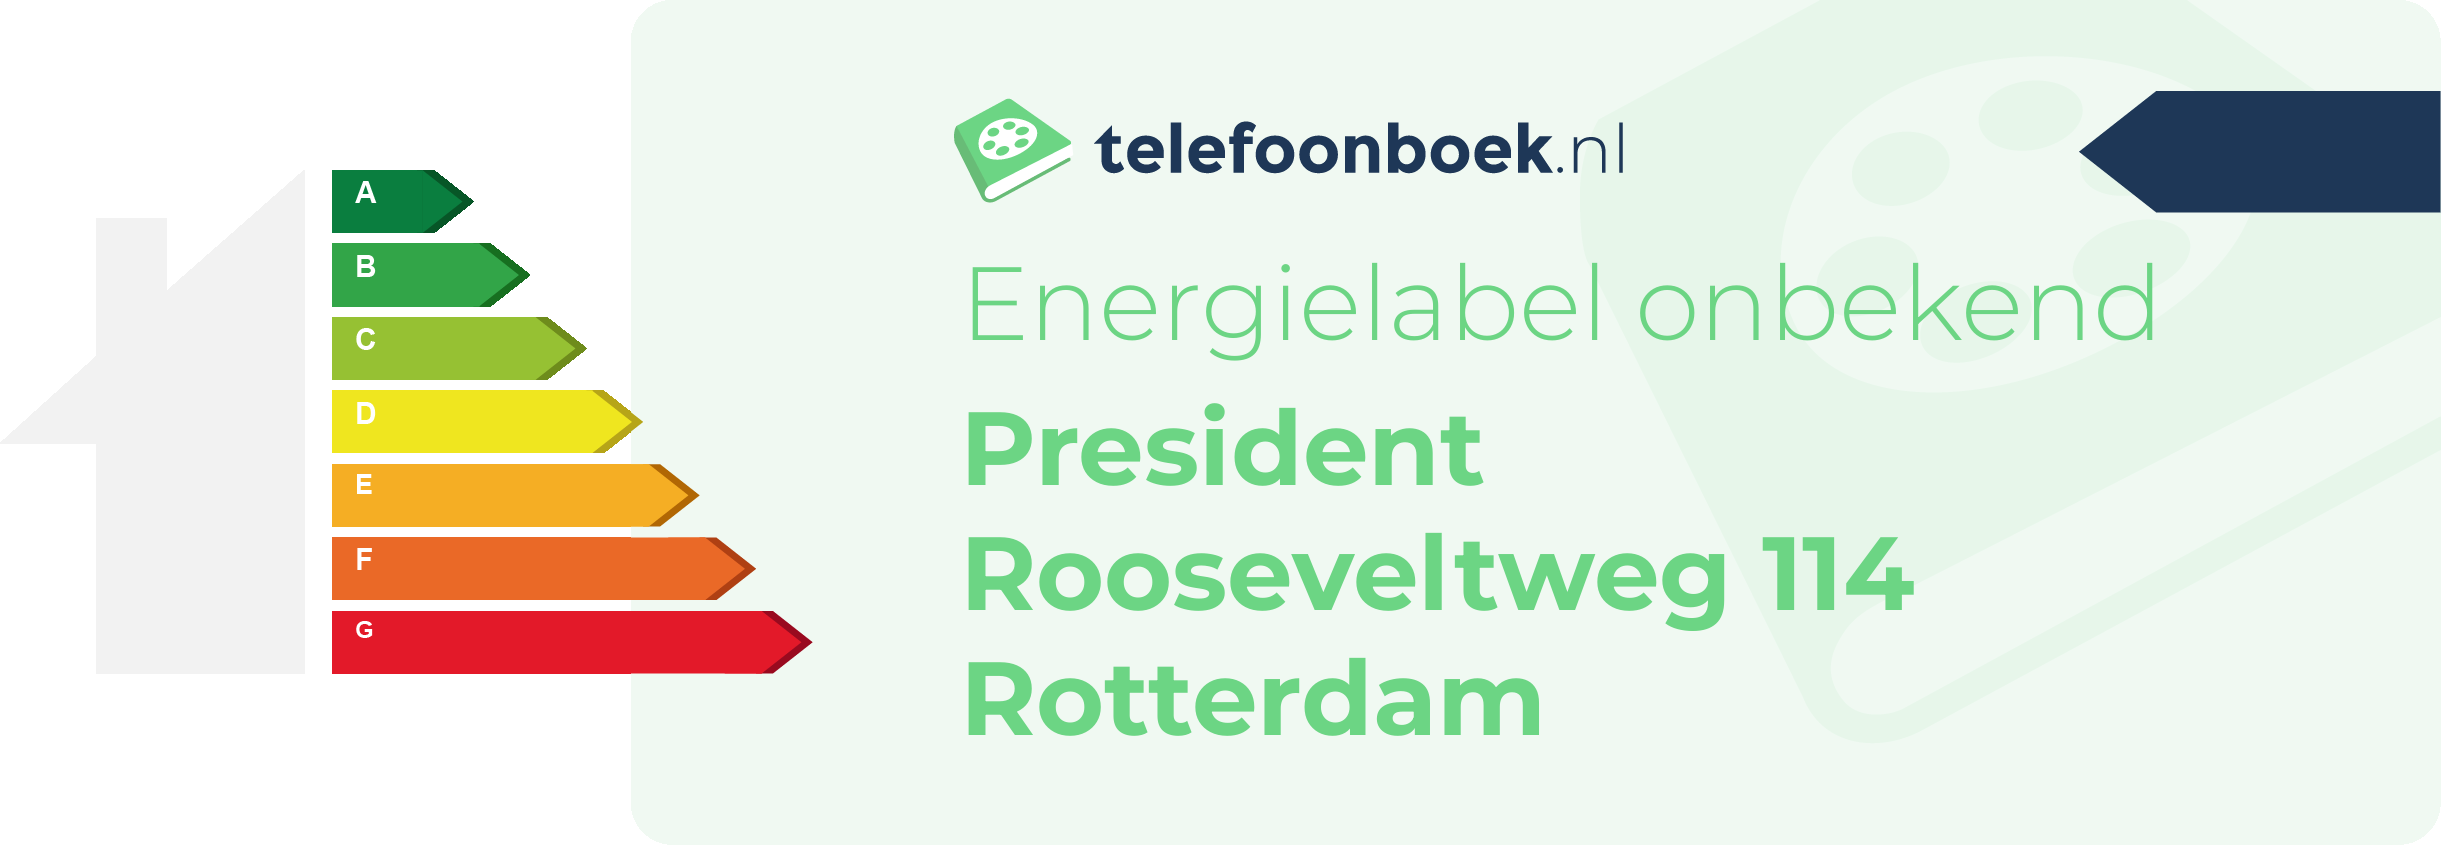 Energielabel President Rooseveltweg 114 Rotterdam